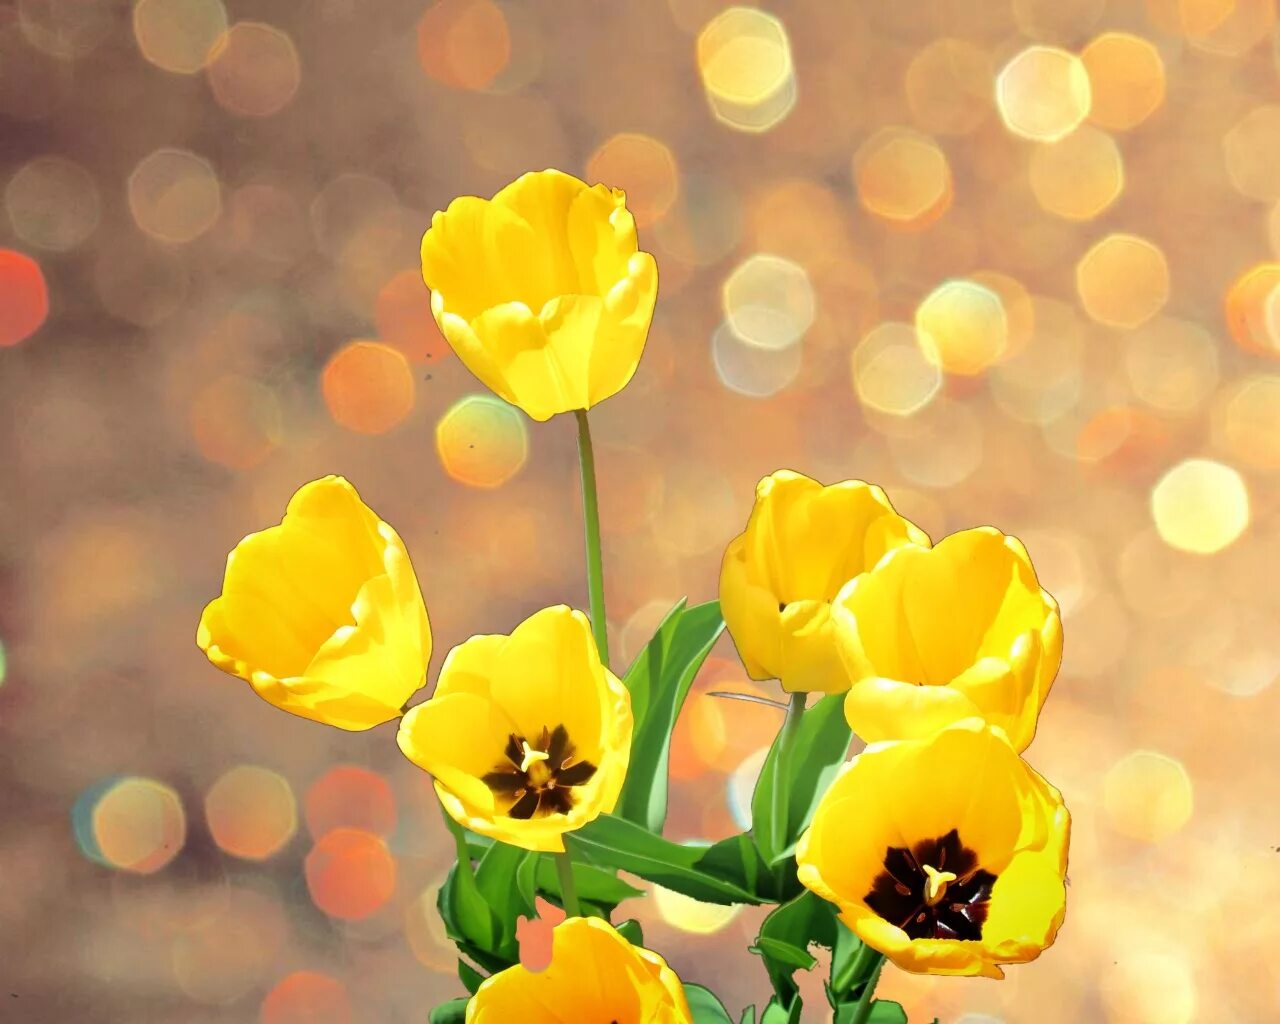 Что означает желтый тюльпан на языке цветов. Желтые тюльпаны. Желтый тюльпан серединка. Желтые тюльпаны внутри. Тычинки желтого тюльпана.